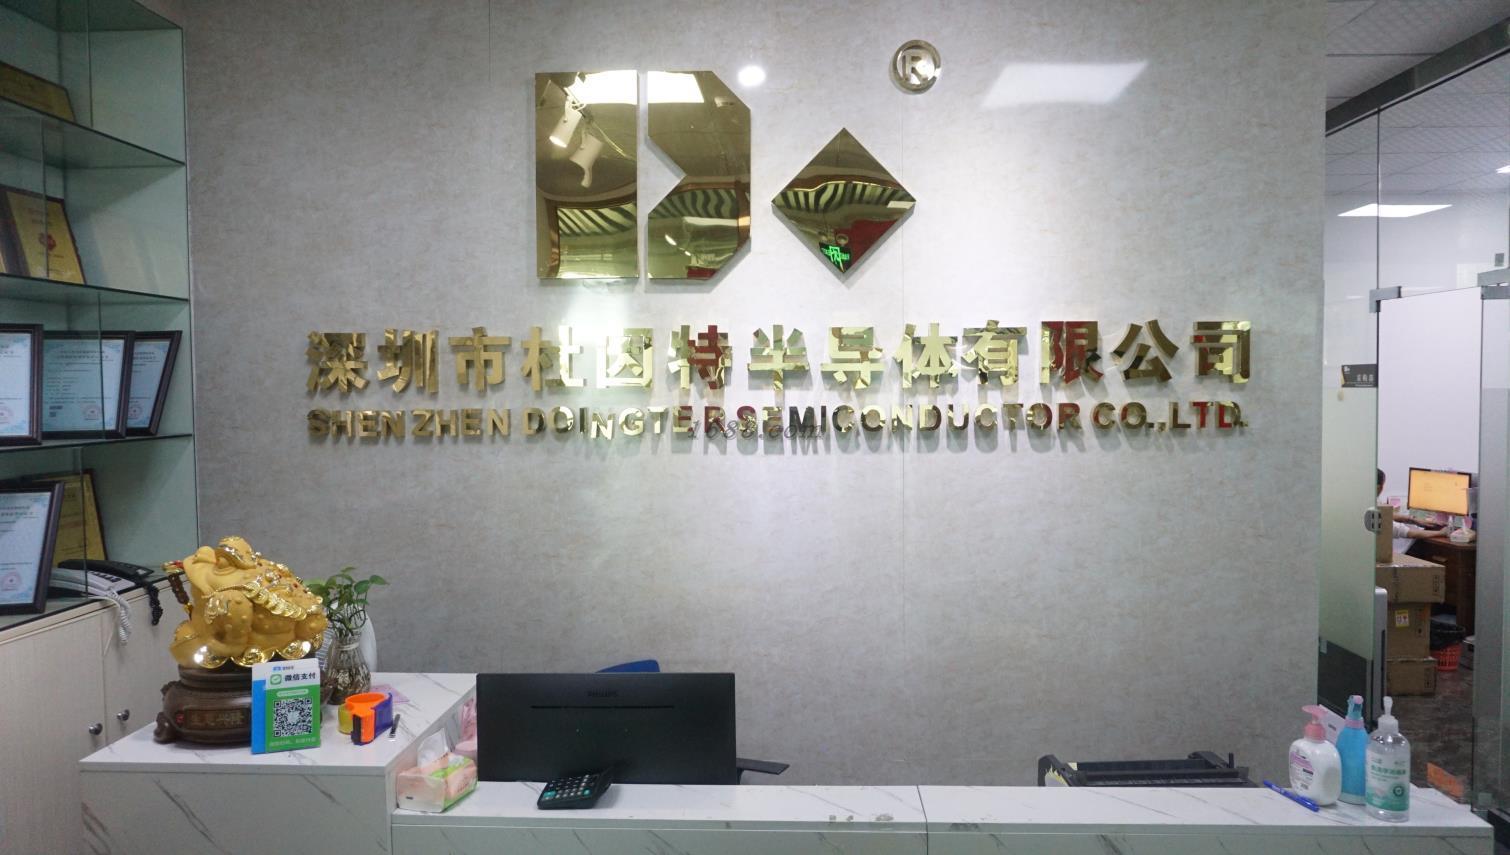   Shenzhen Duint Semiconductor Co., Ltd